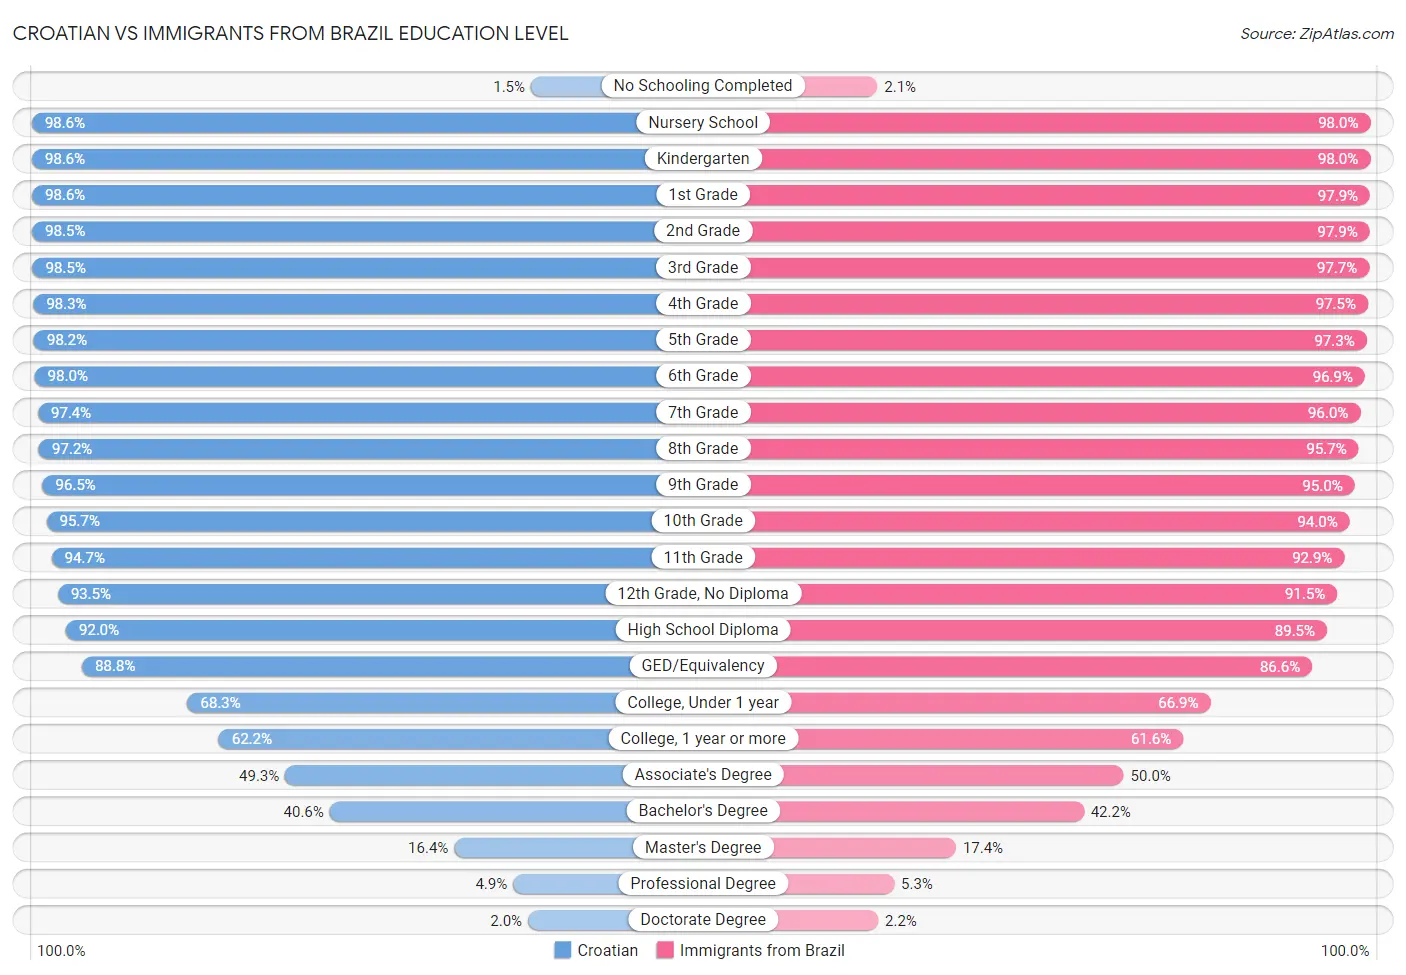 Croatian vs Immigrants from Brazil Education Level